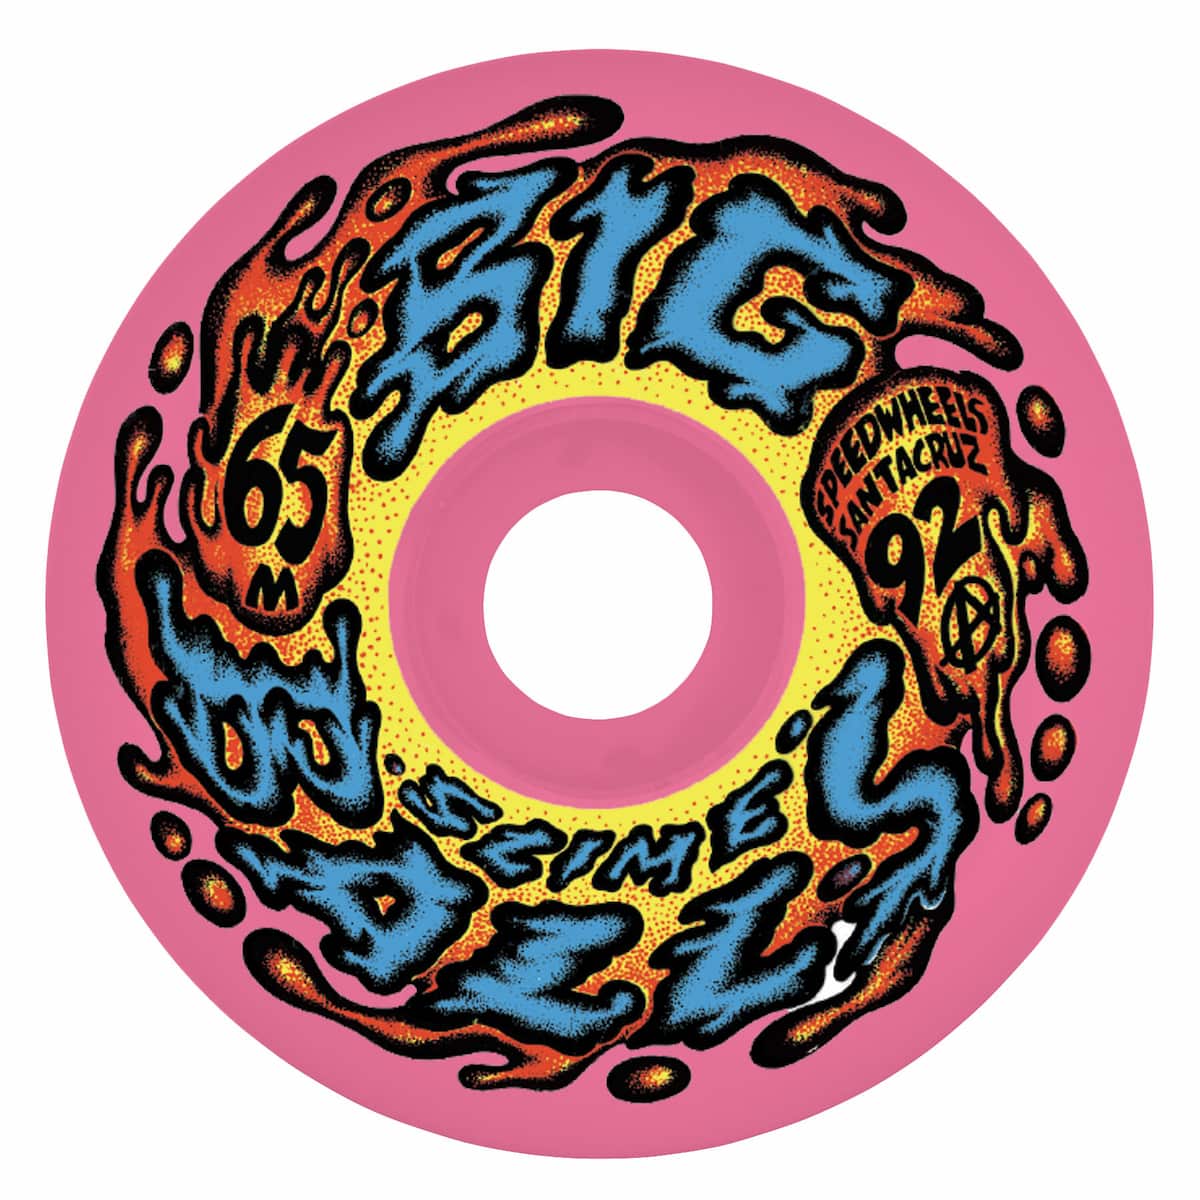 Slimeballs – 65mm Big Balls Speedwheels Reissue Pink 92a